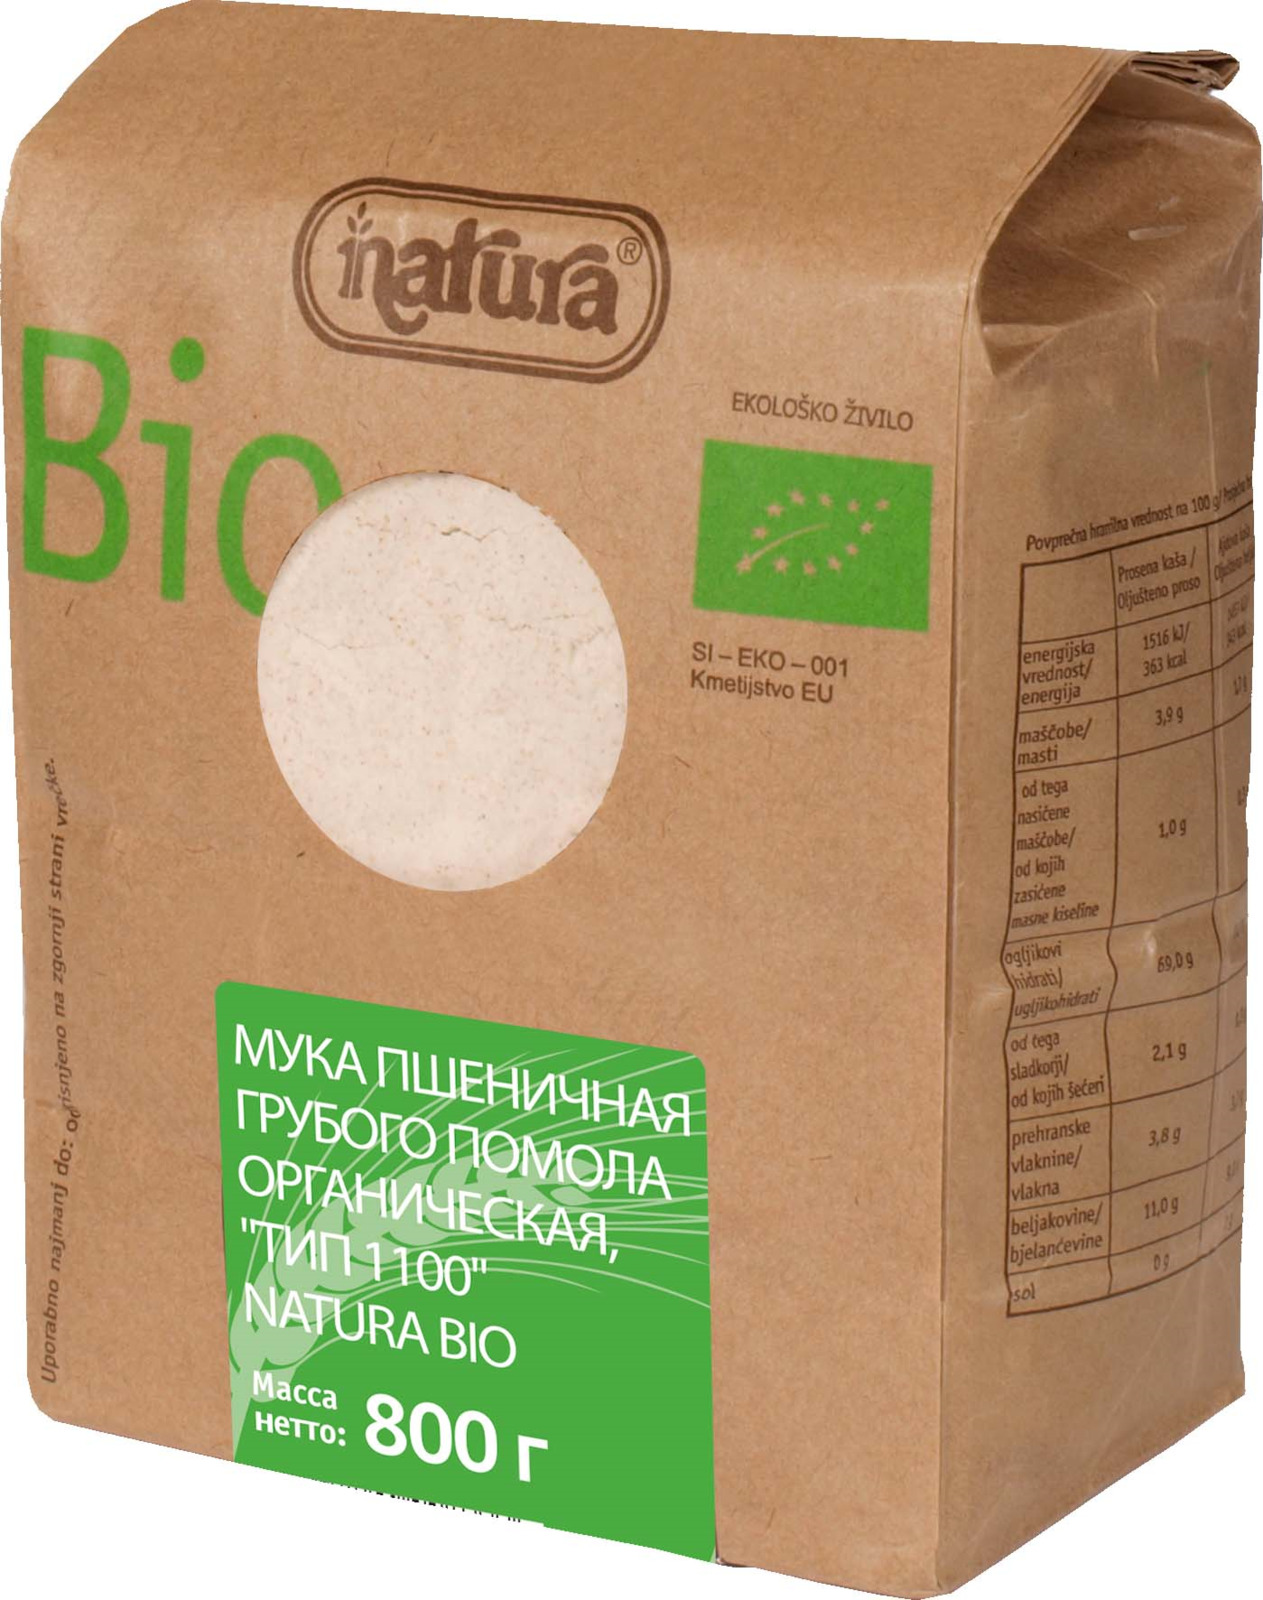 Zito Natura Bio Мука пшеничная грубого помола, 800 г